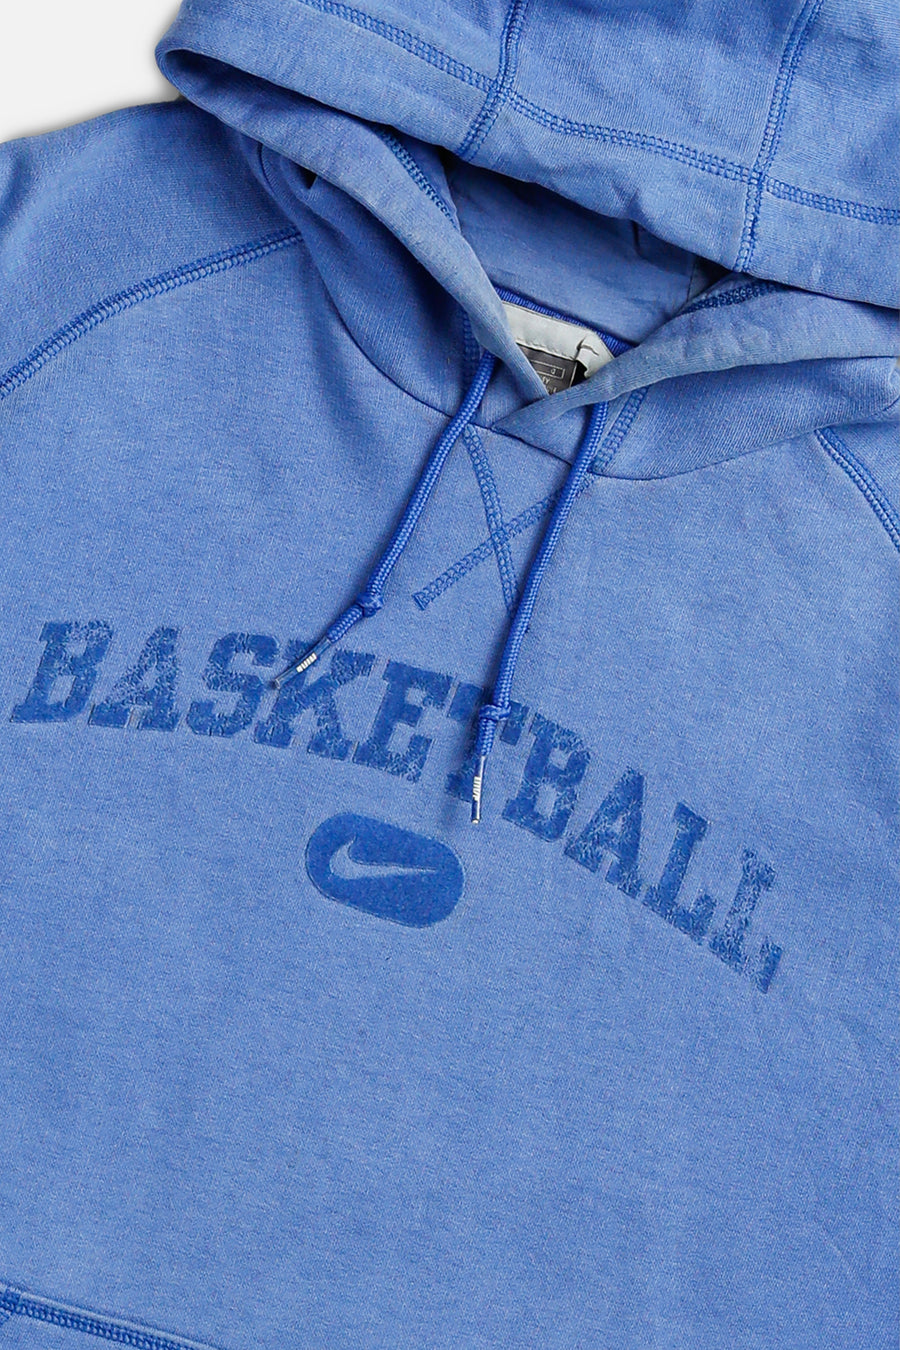 Vintage Nike Basketball Sweatshirt - L